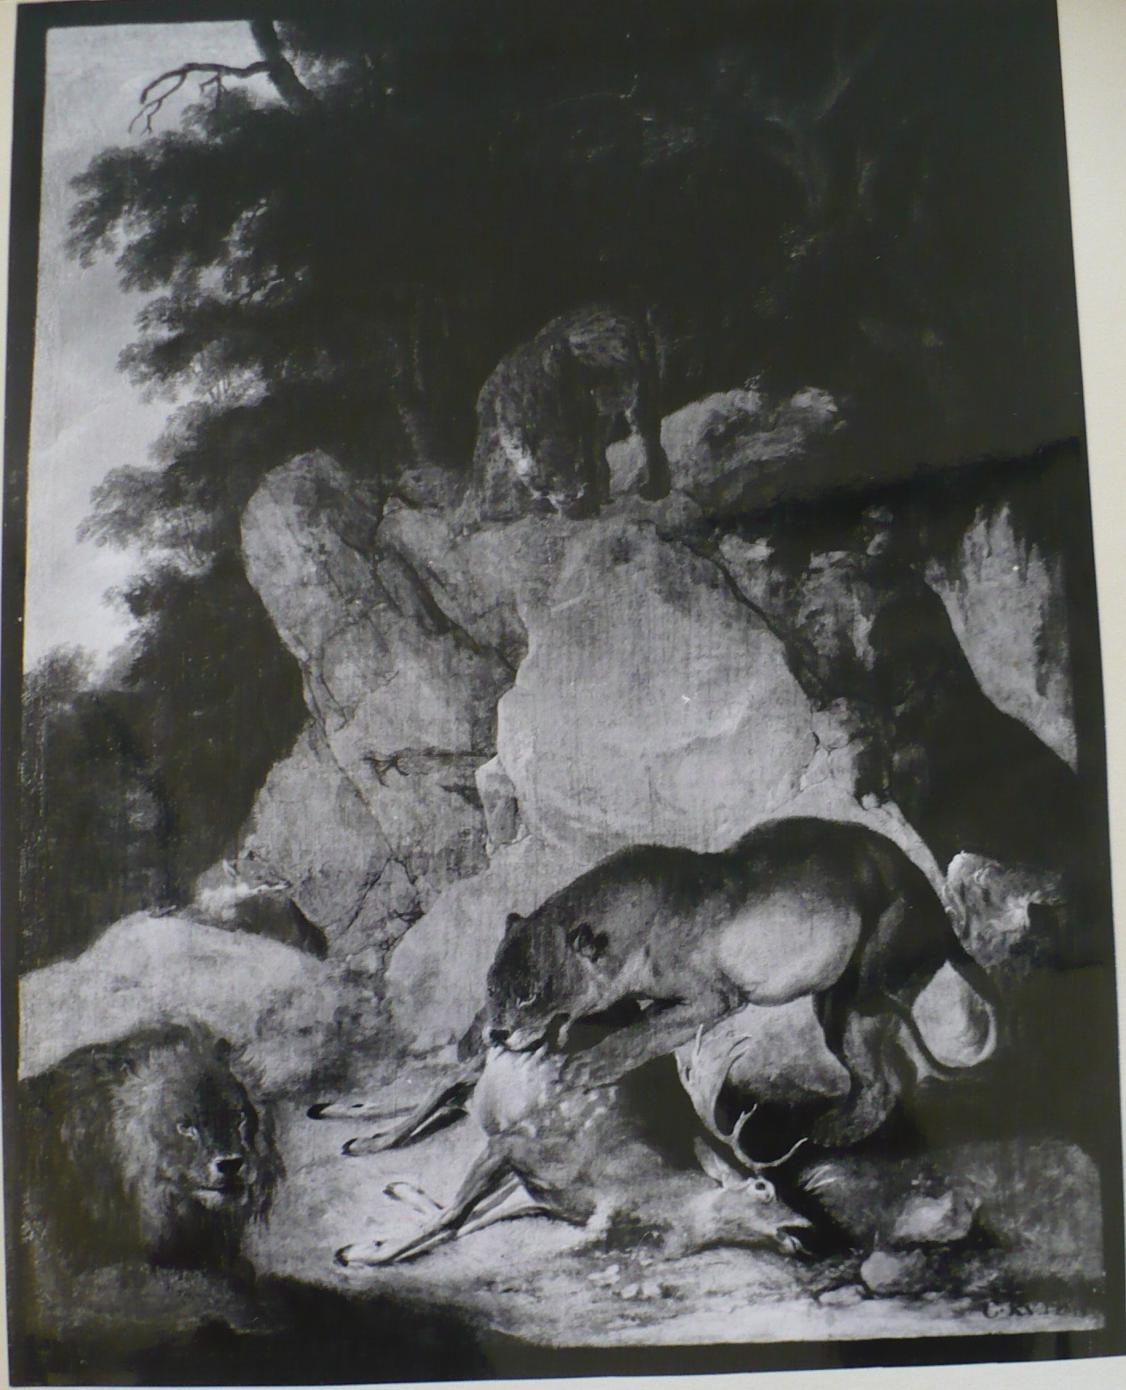 Obrázek 53: Carl Andreas Ruthart, Daněk ulovený lvy, okolo 1665, olej,